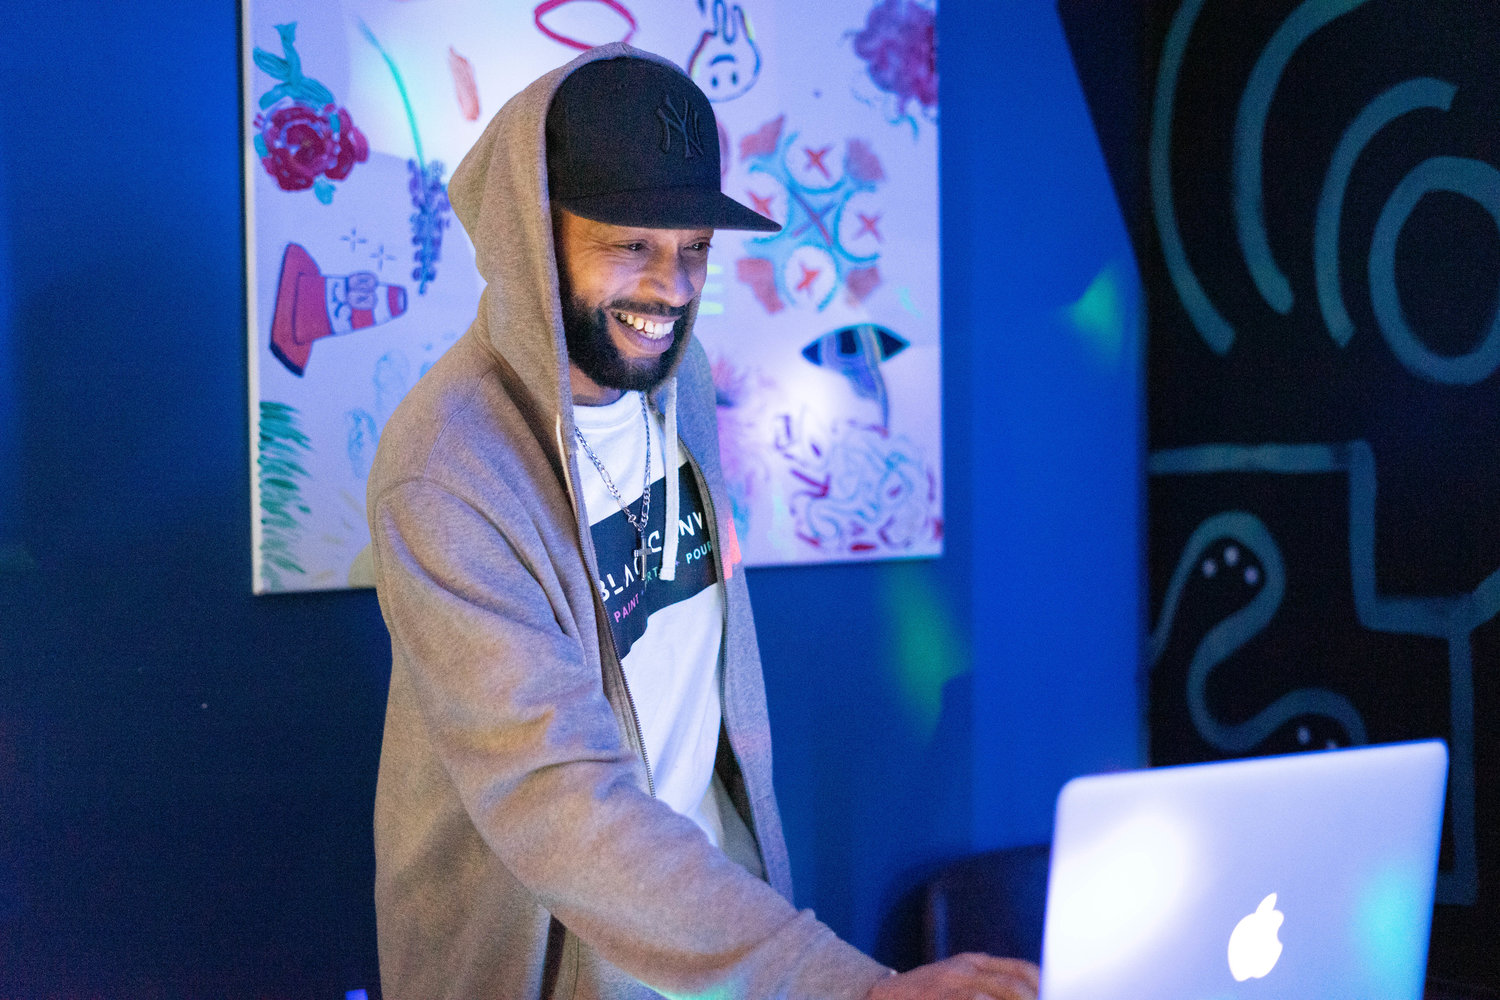 DJ Bernard Mention provides music for Black Canvas' Paint Party.